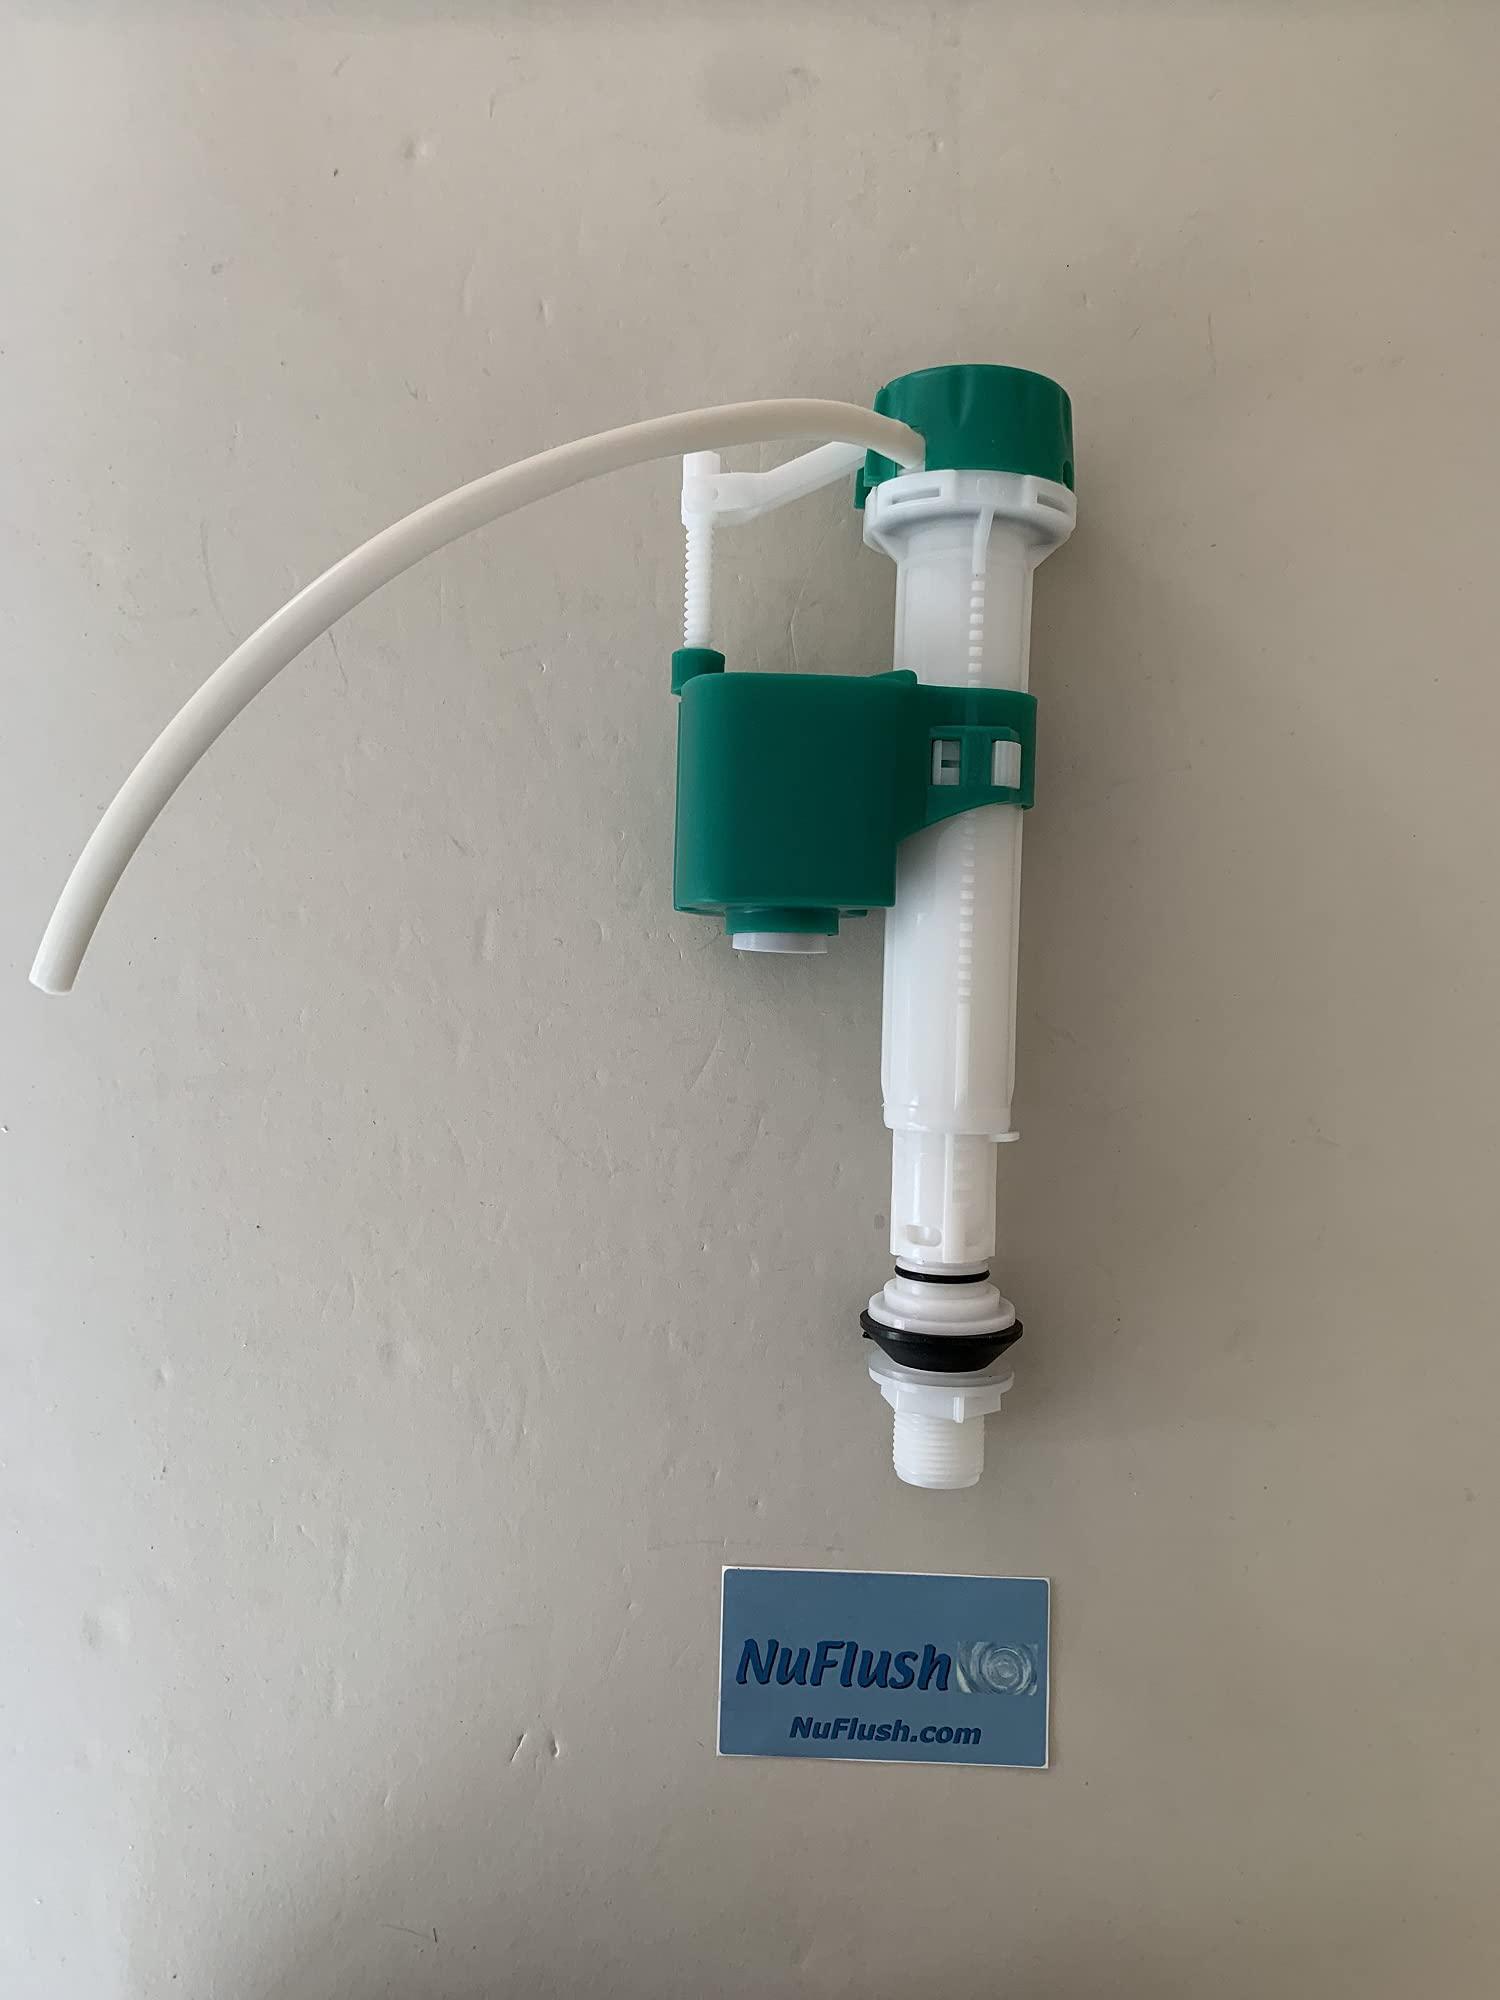 NUFLUSH crane anti-siphon fill valve replacement by nuflush